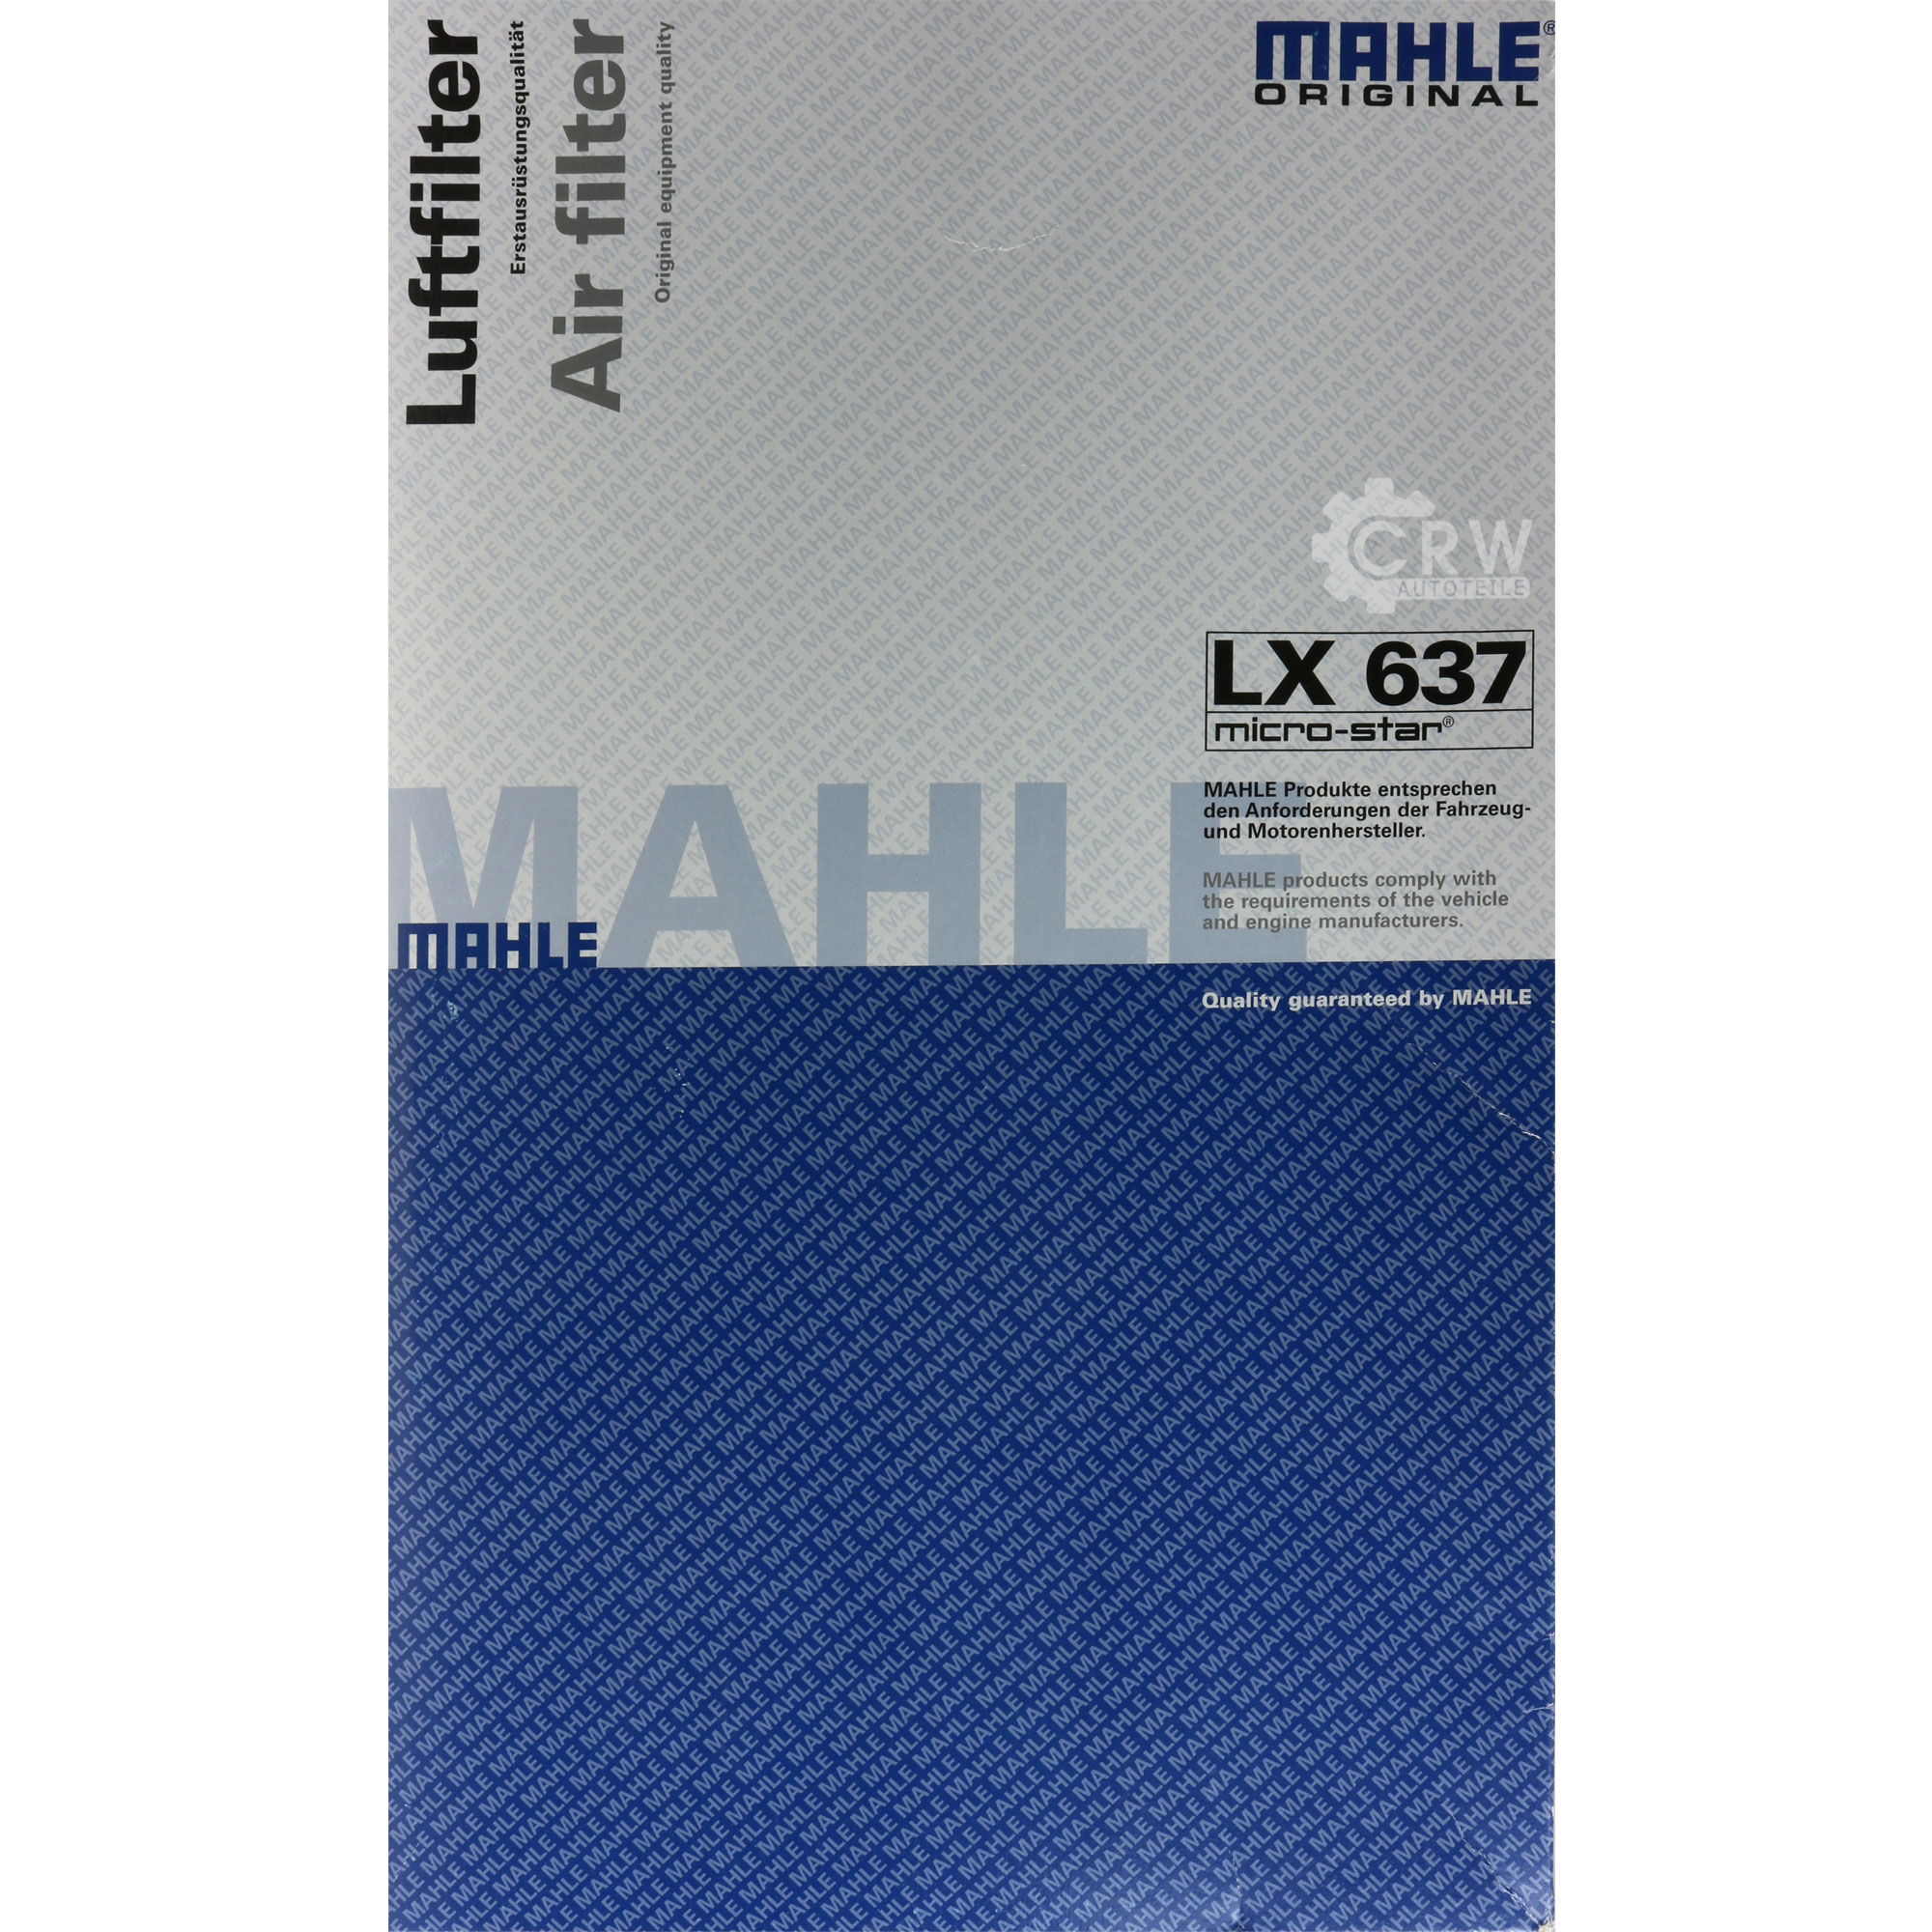 MAHLE Luftfilter passend für Volvo S80 I TS XY 2.4 2.0 T 184 3.0 T6 124 2.5